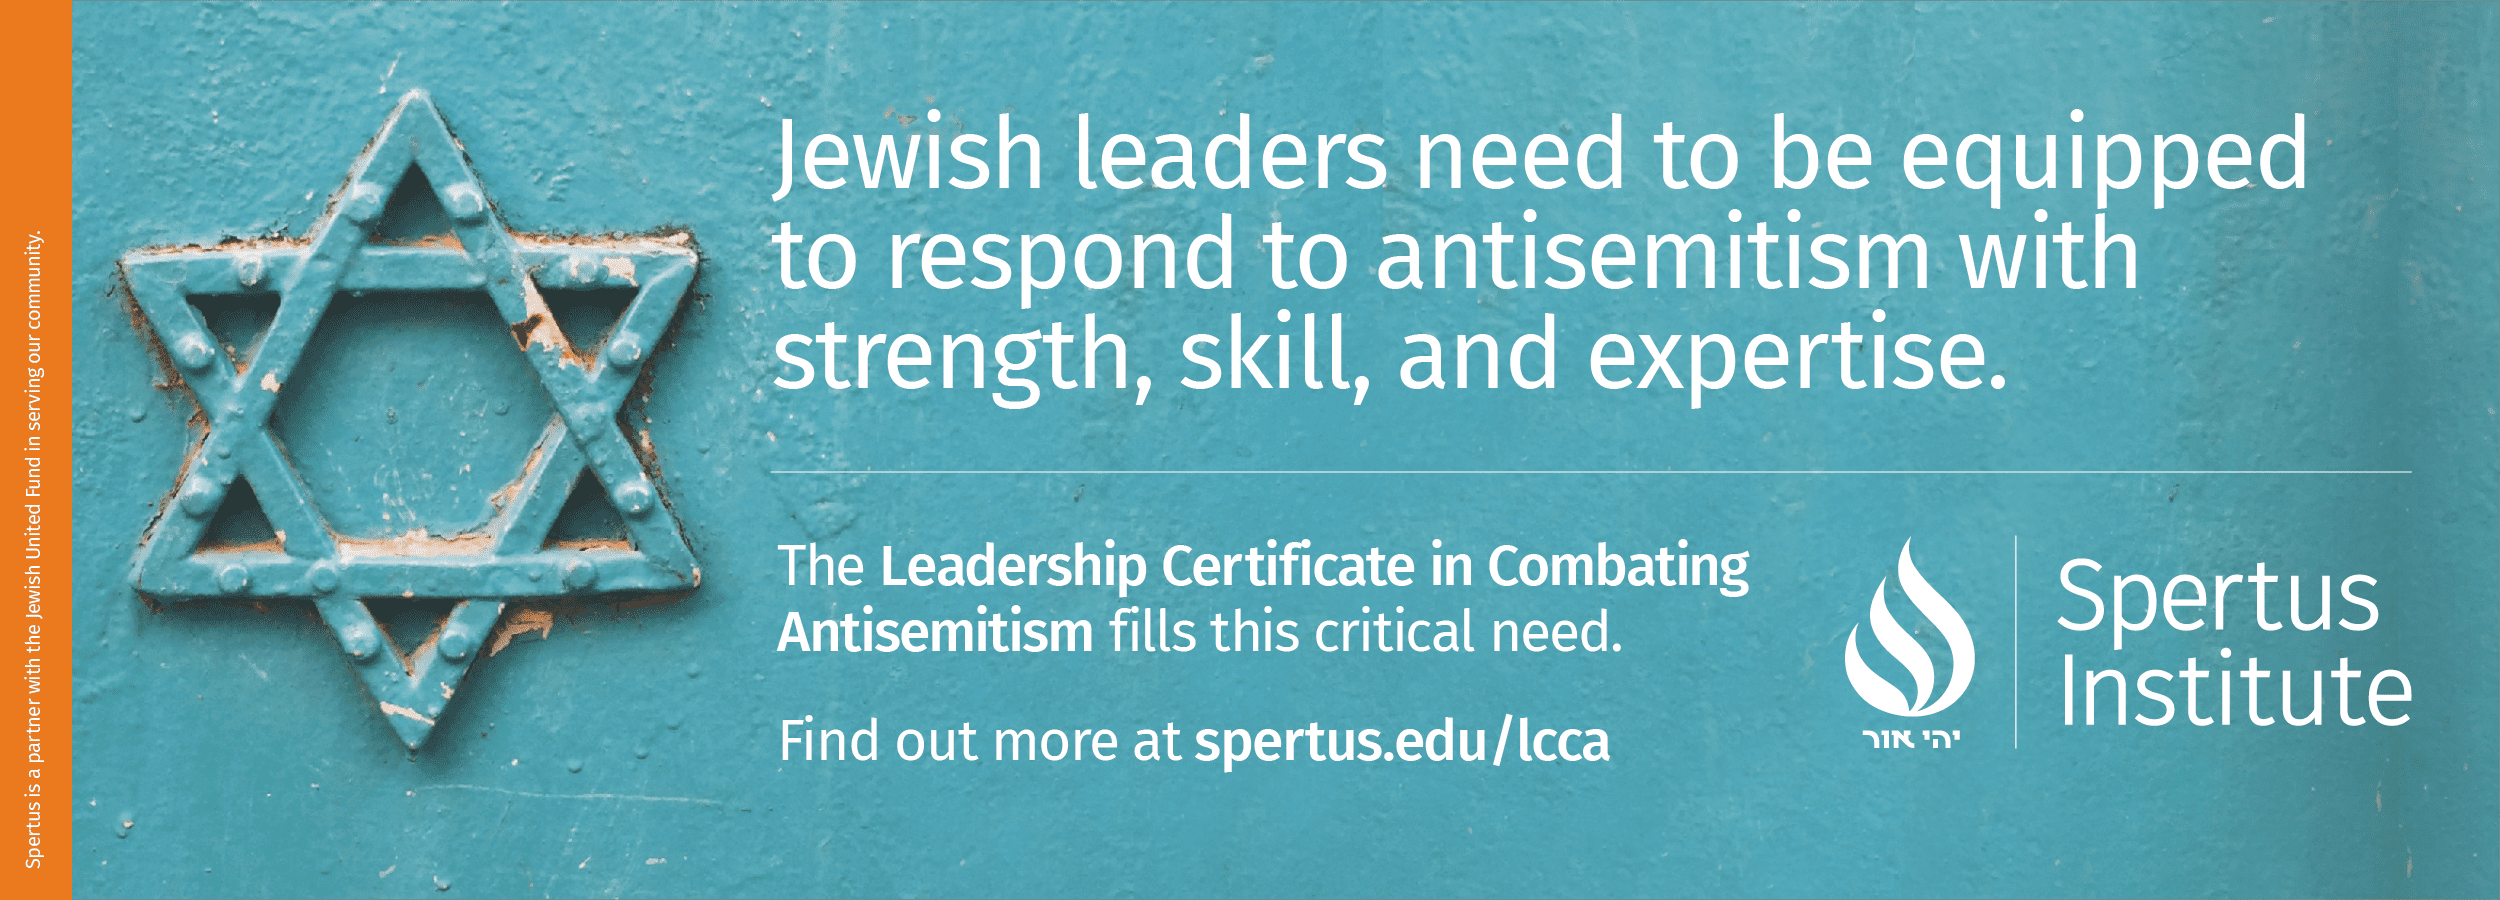 Spertus Institute The Leadership Certificate in Combating Antisemitism